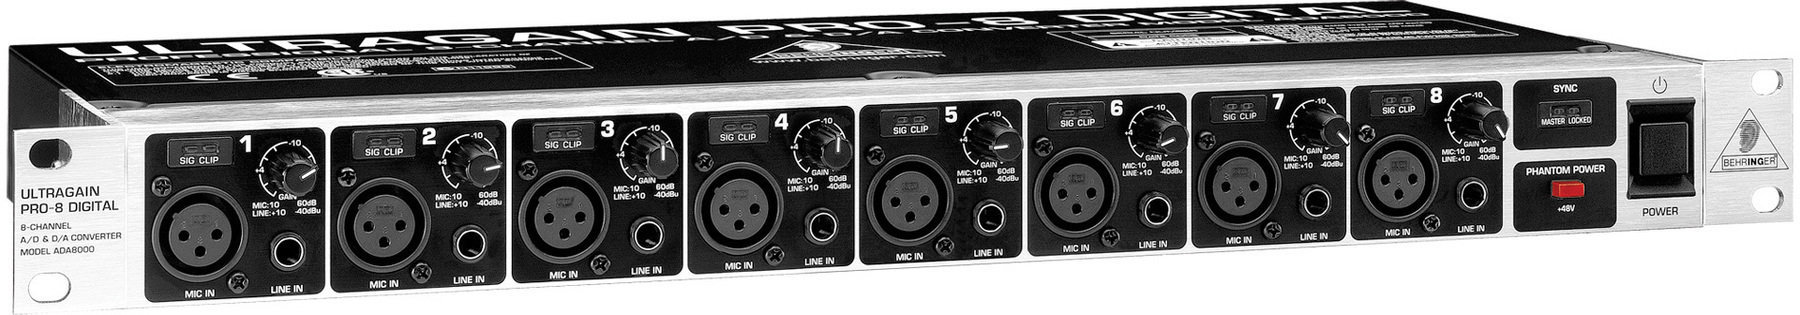 Studio-accessoires Behringer ADA 8000 ULTRAGAIN PRO-8 DIGITAL